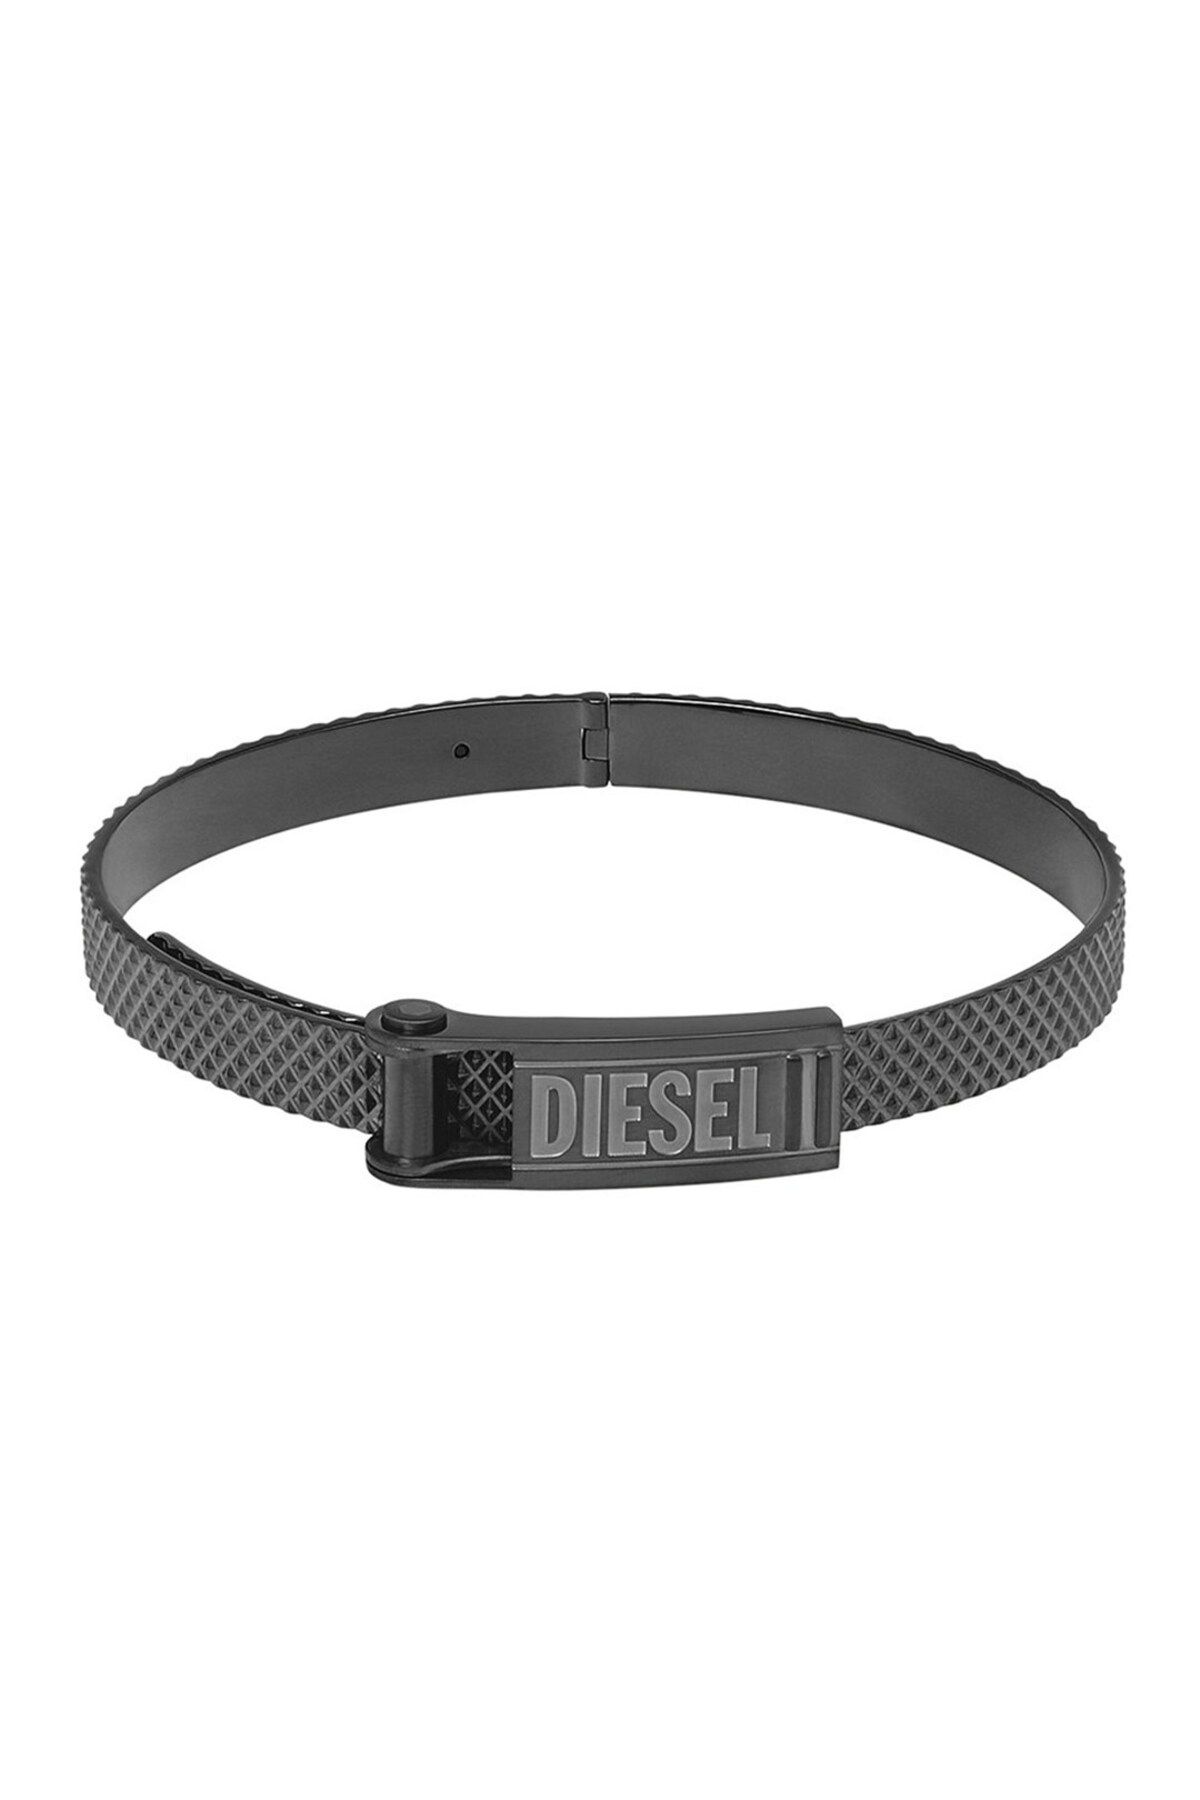 Diesel Djdx1358-060 Erkek Bileklik